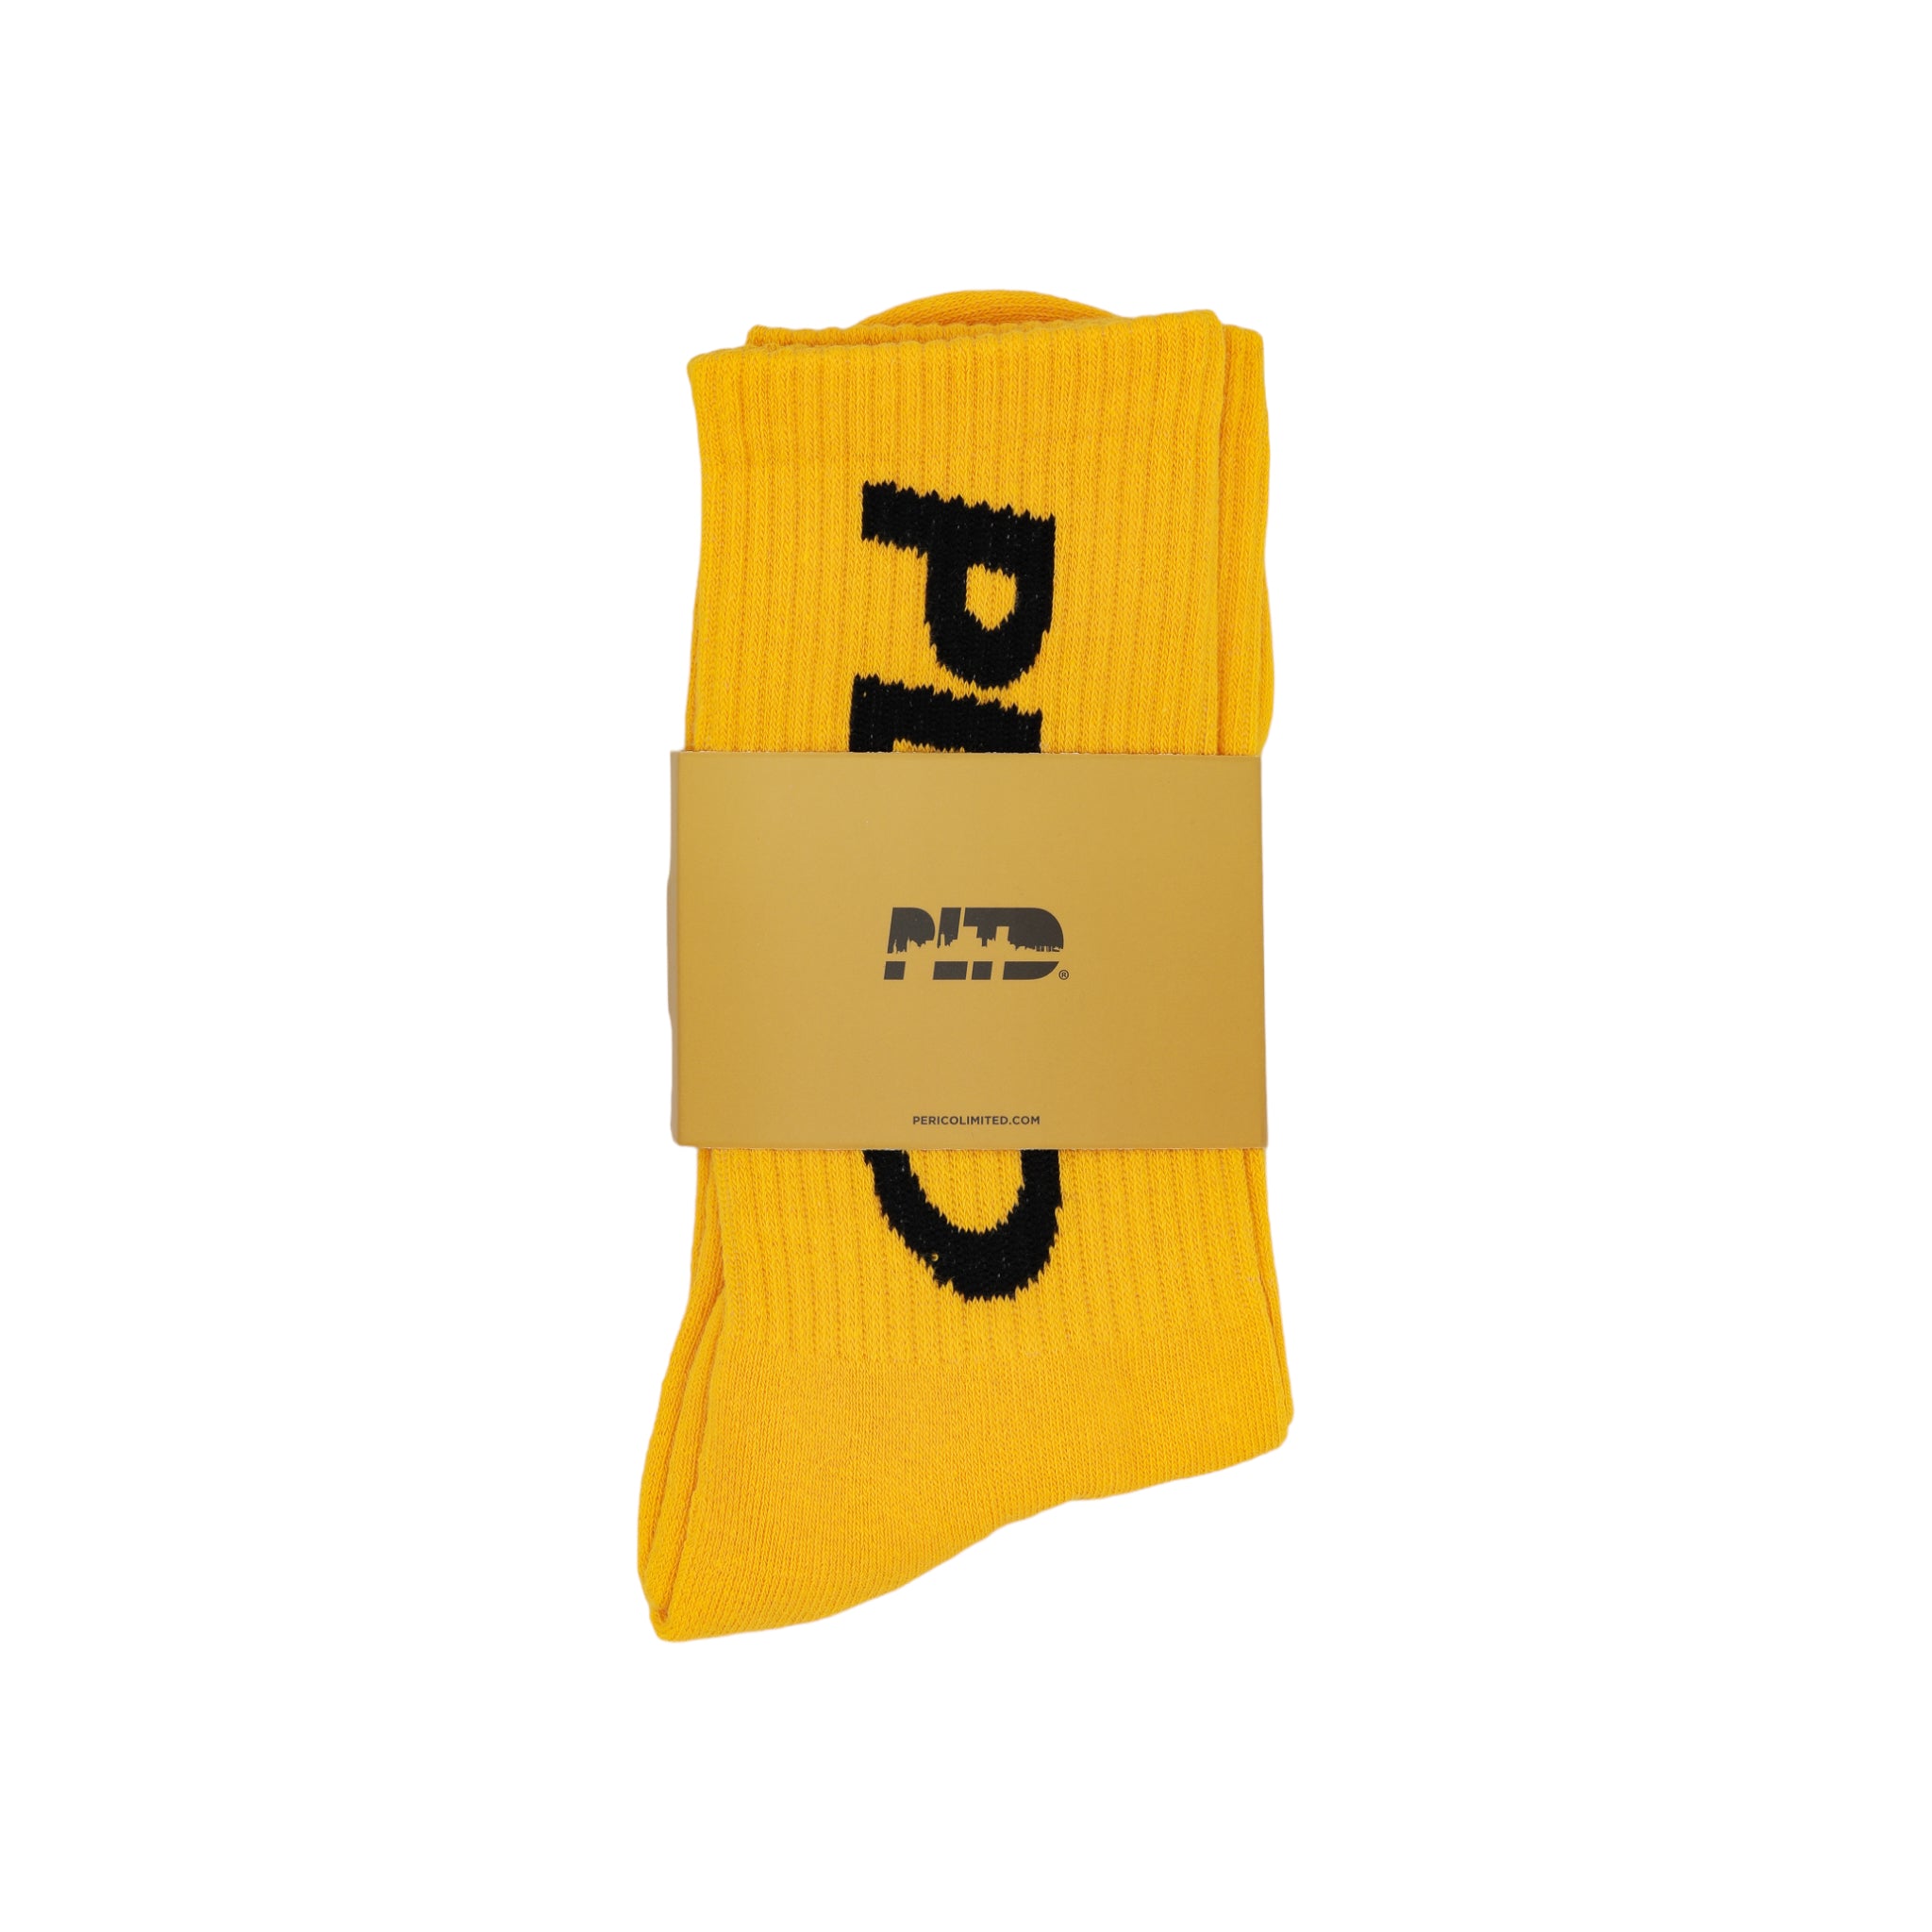 Team PLTD - Gold Terry Cloth Socks